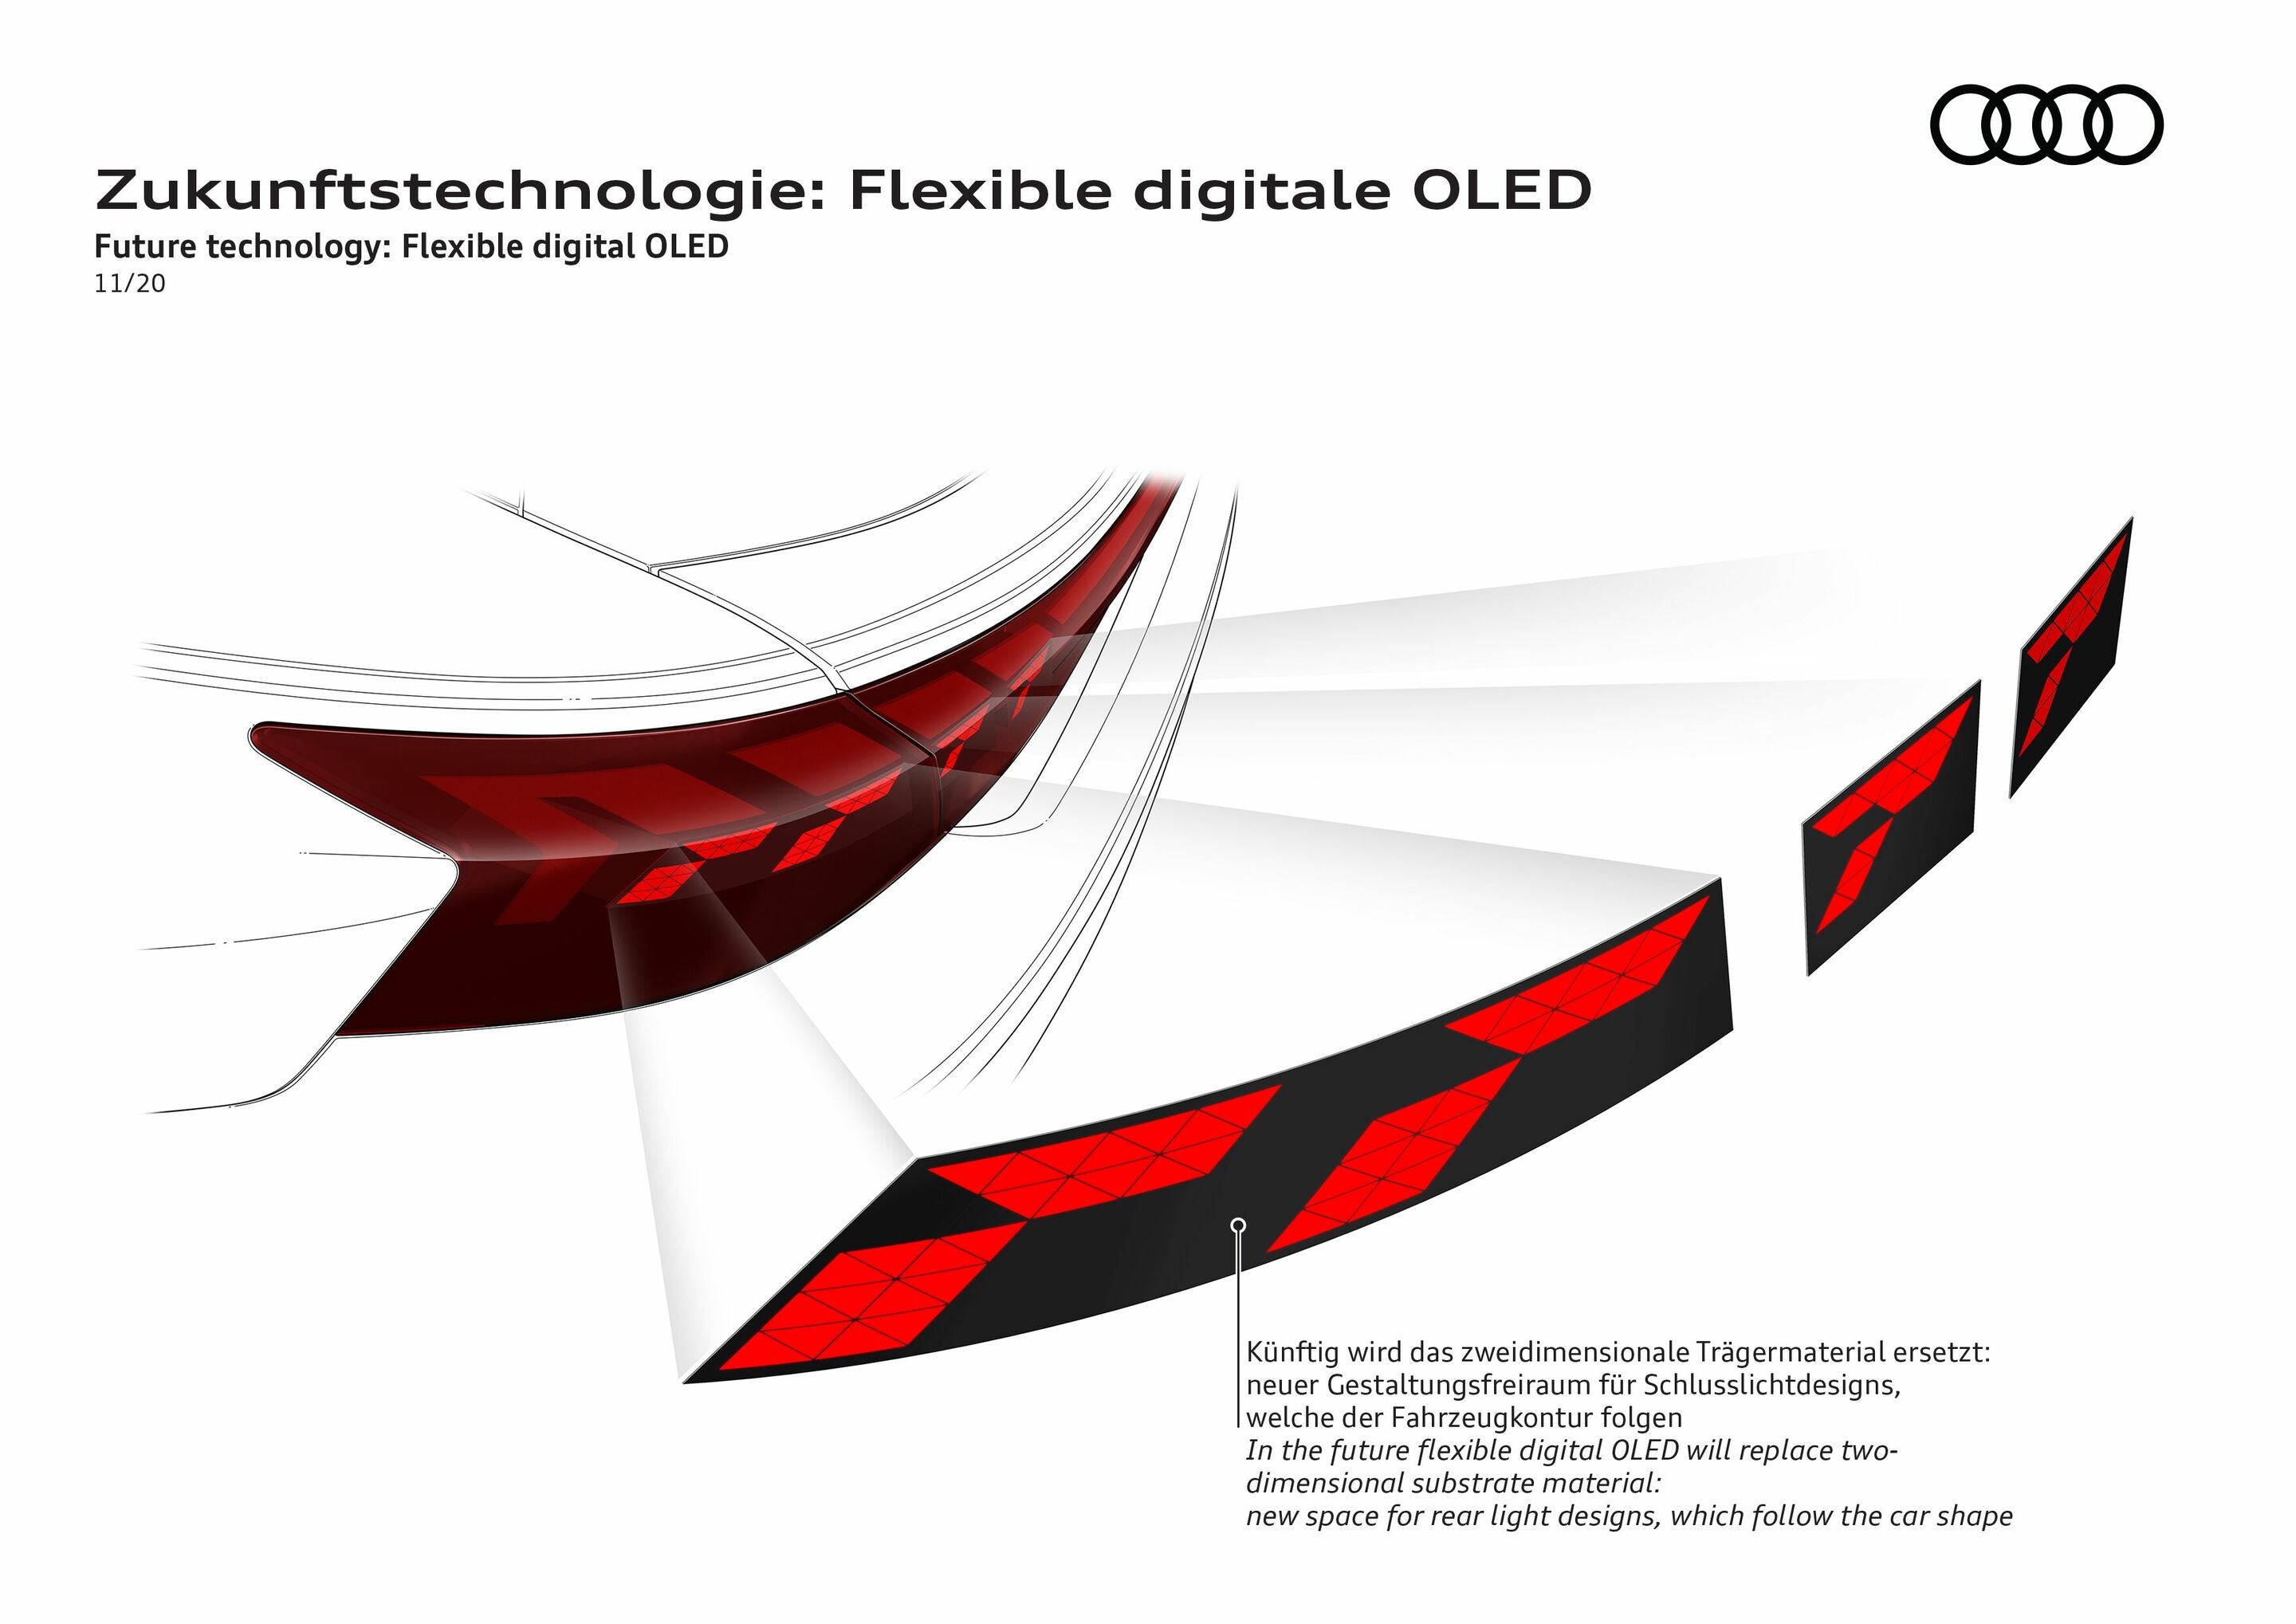 Zukunftstechnologie: Flexible digitale OLED